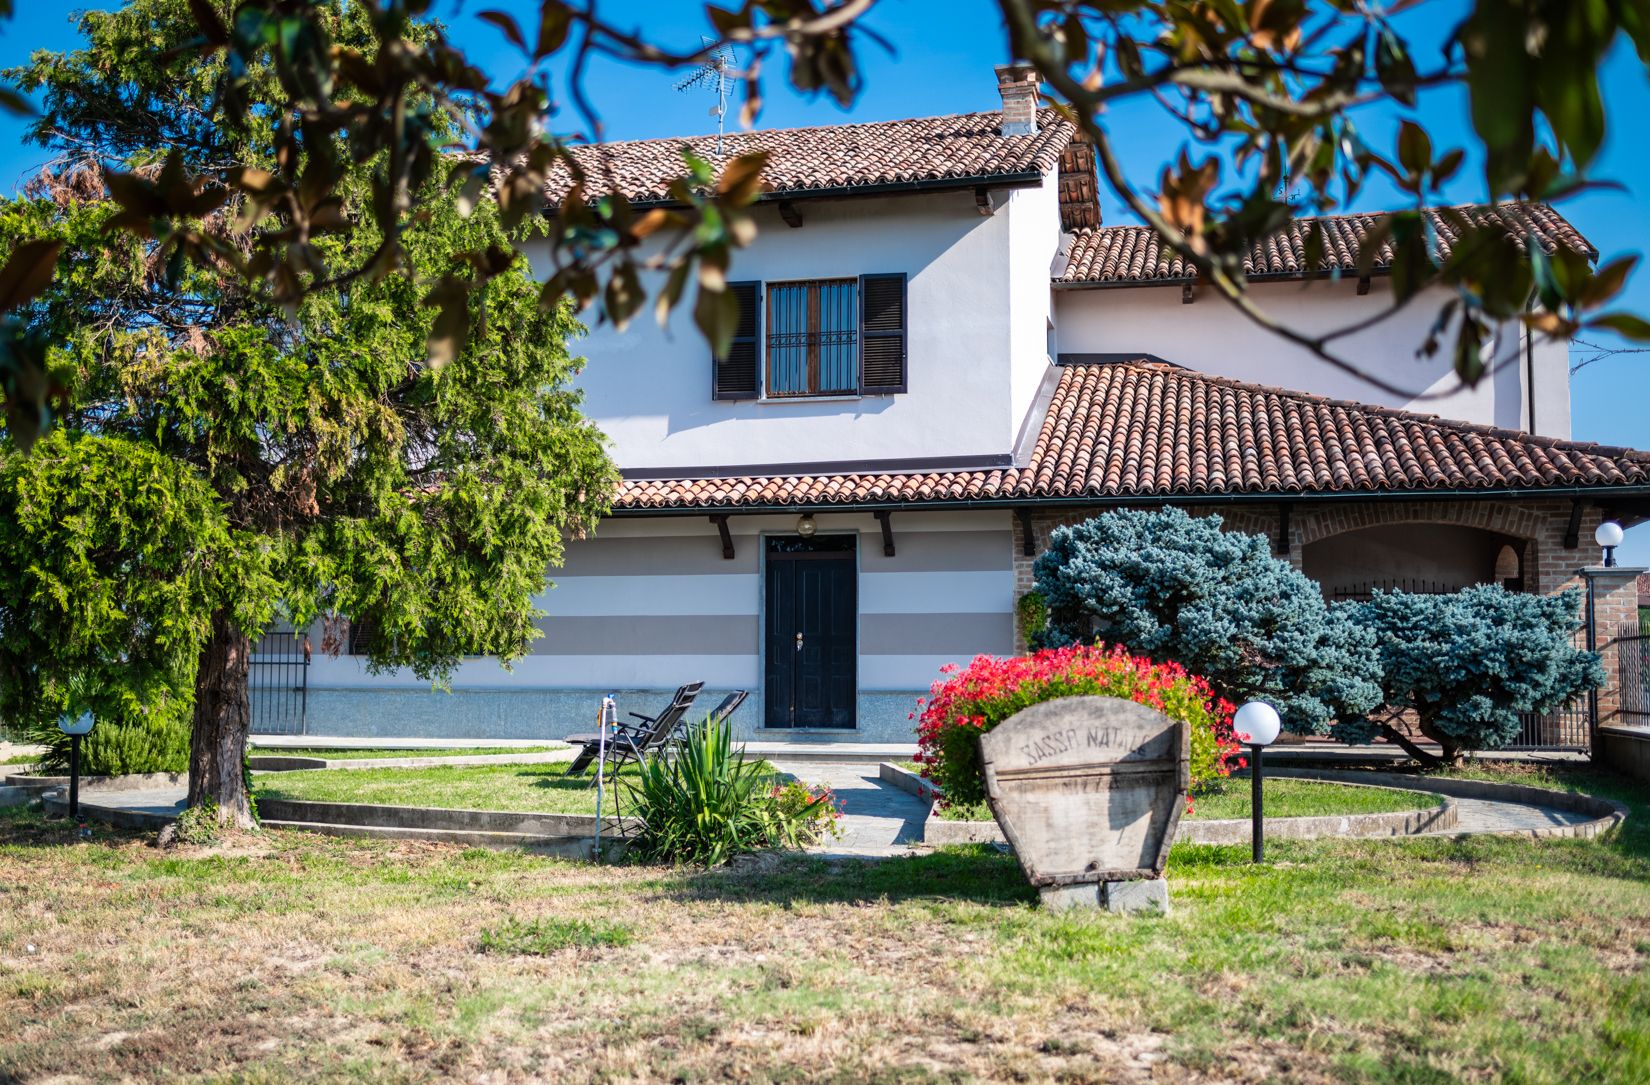 For sale cottage in quiet zone Nizza Monferrato Piemonte